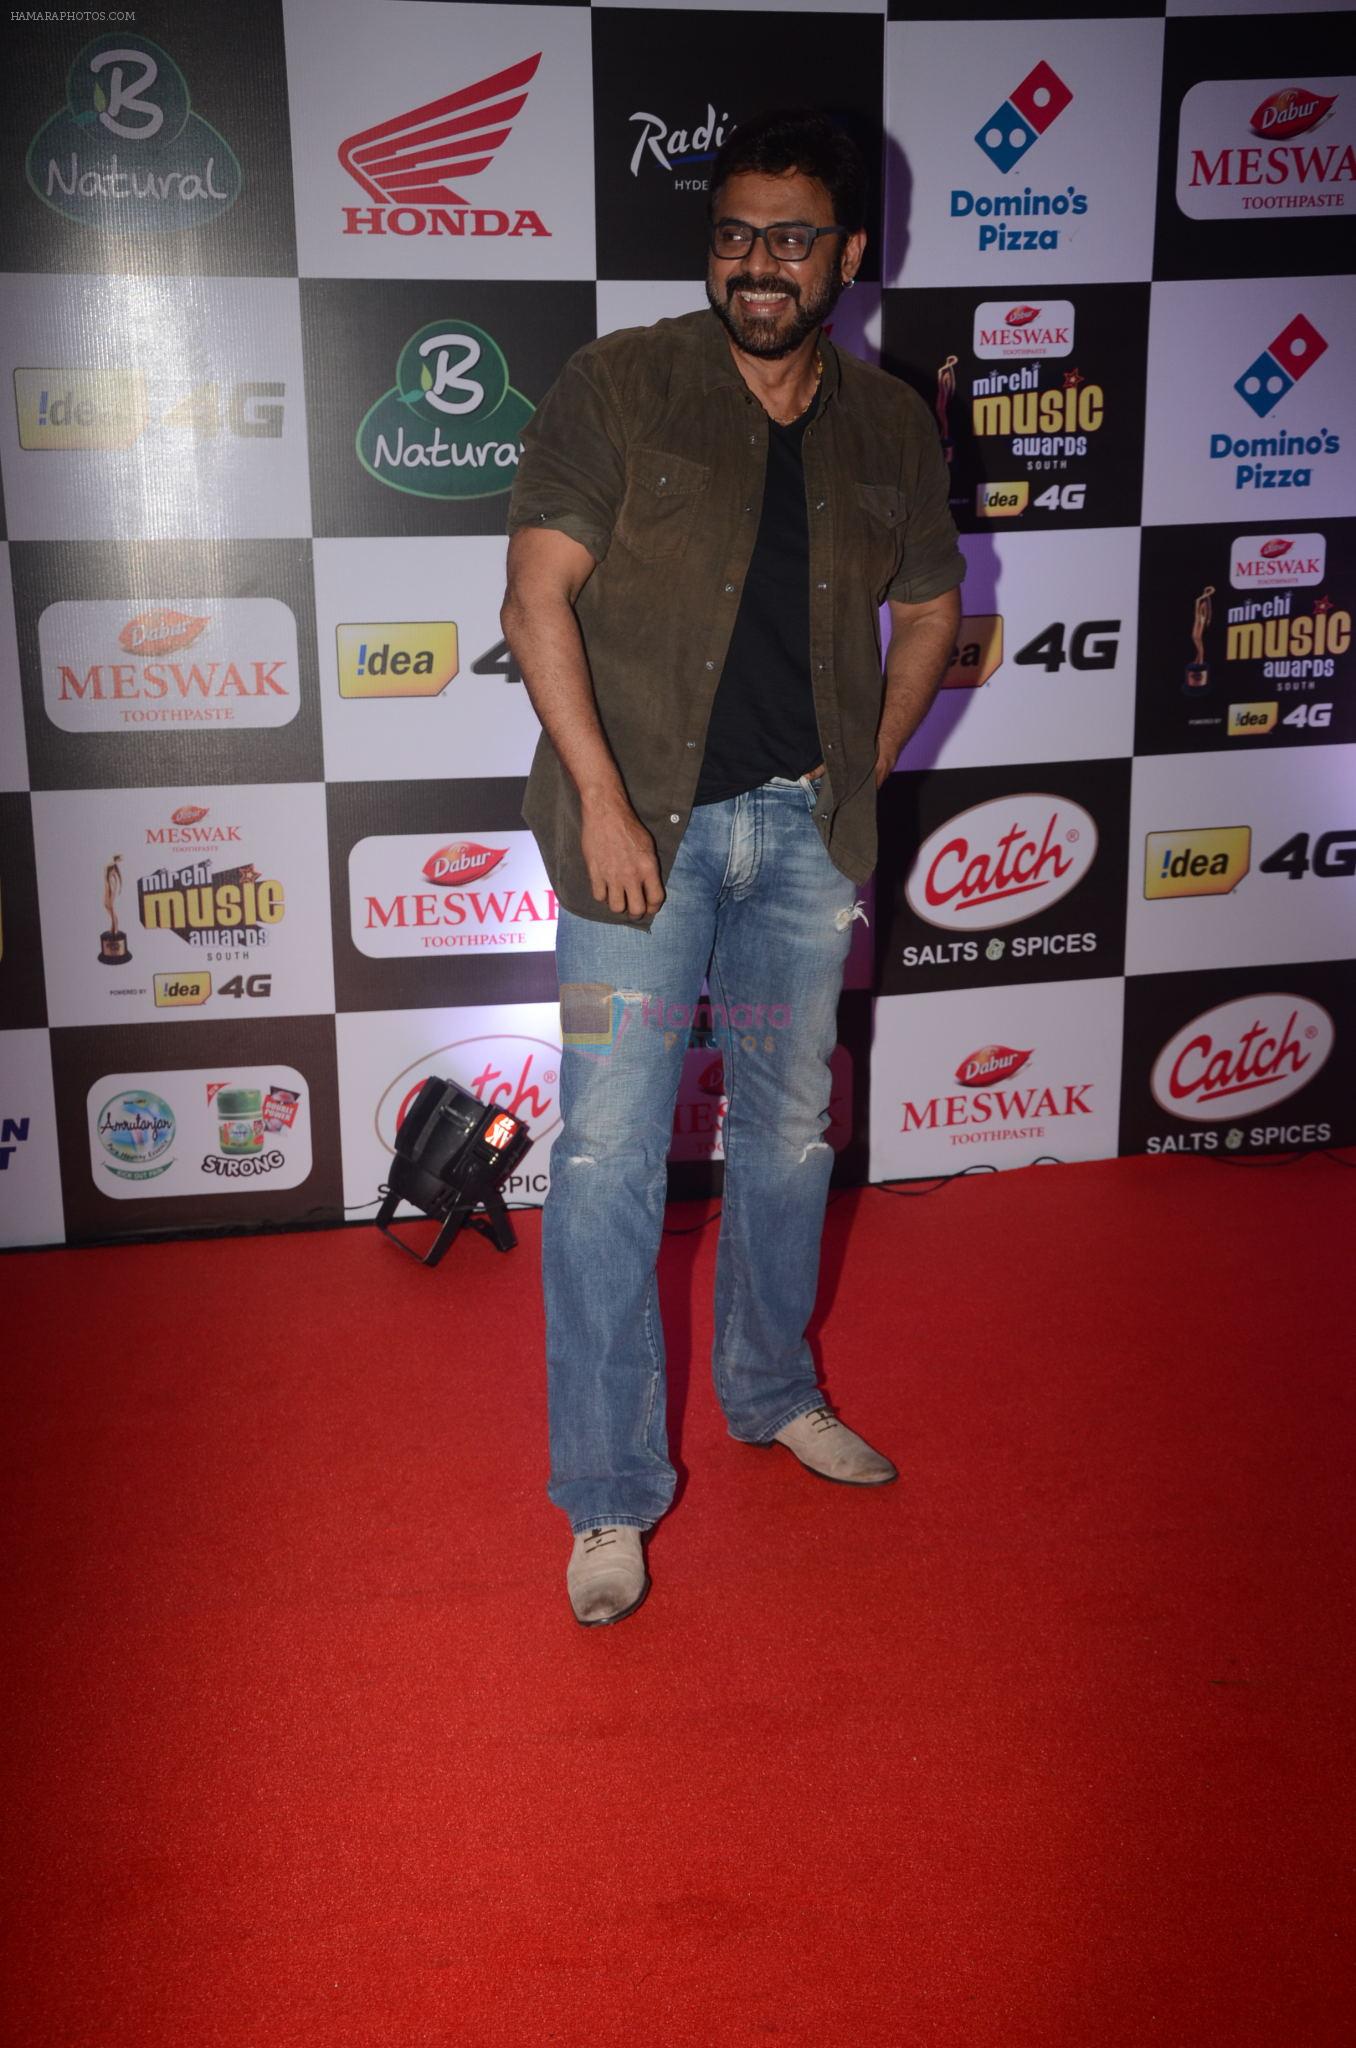 Akkineni Nagarjuna at Mirchi Music Awards 2016 on 27th July 2016